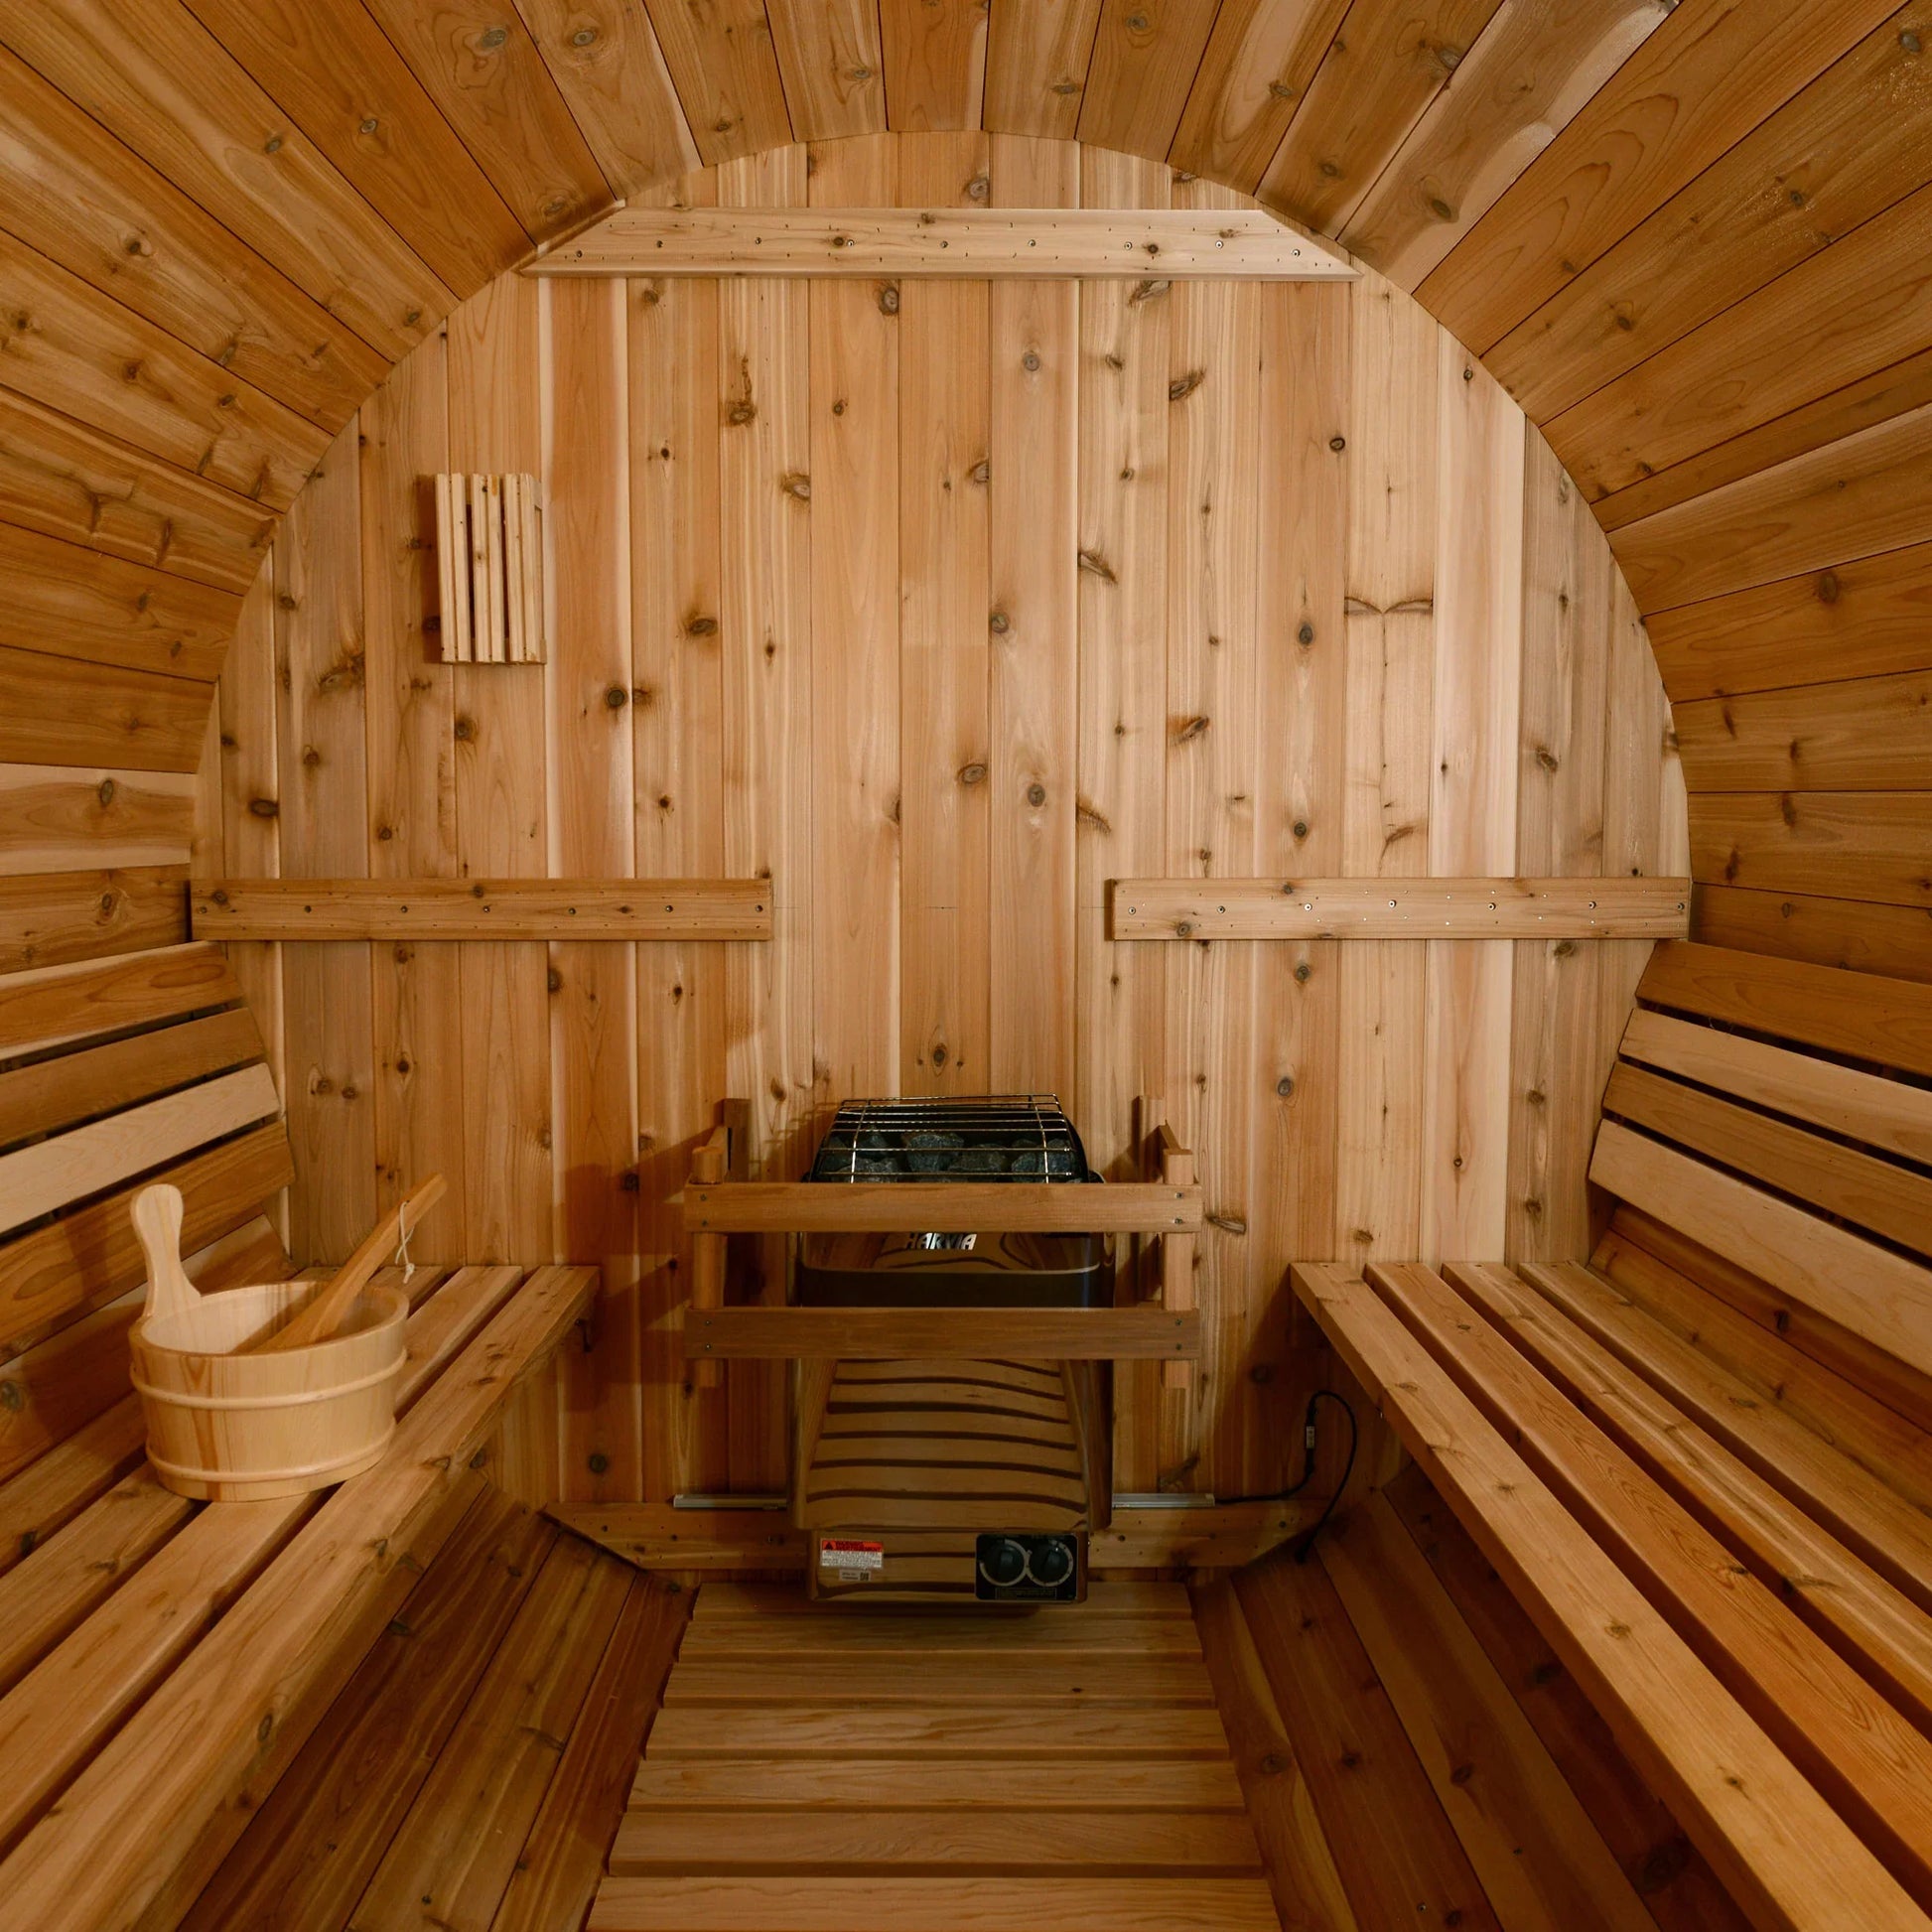 almost heaven saunas-wood barrel- barrel sauna- rustic cedar-outdoor sauna-audra-2 person-4 person-barrel interior